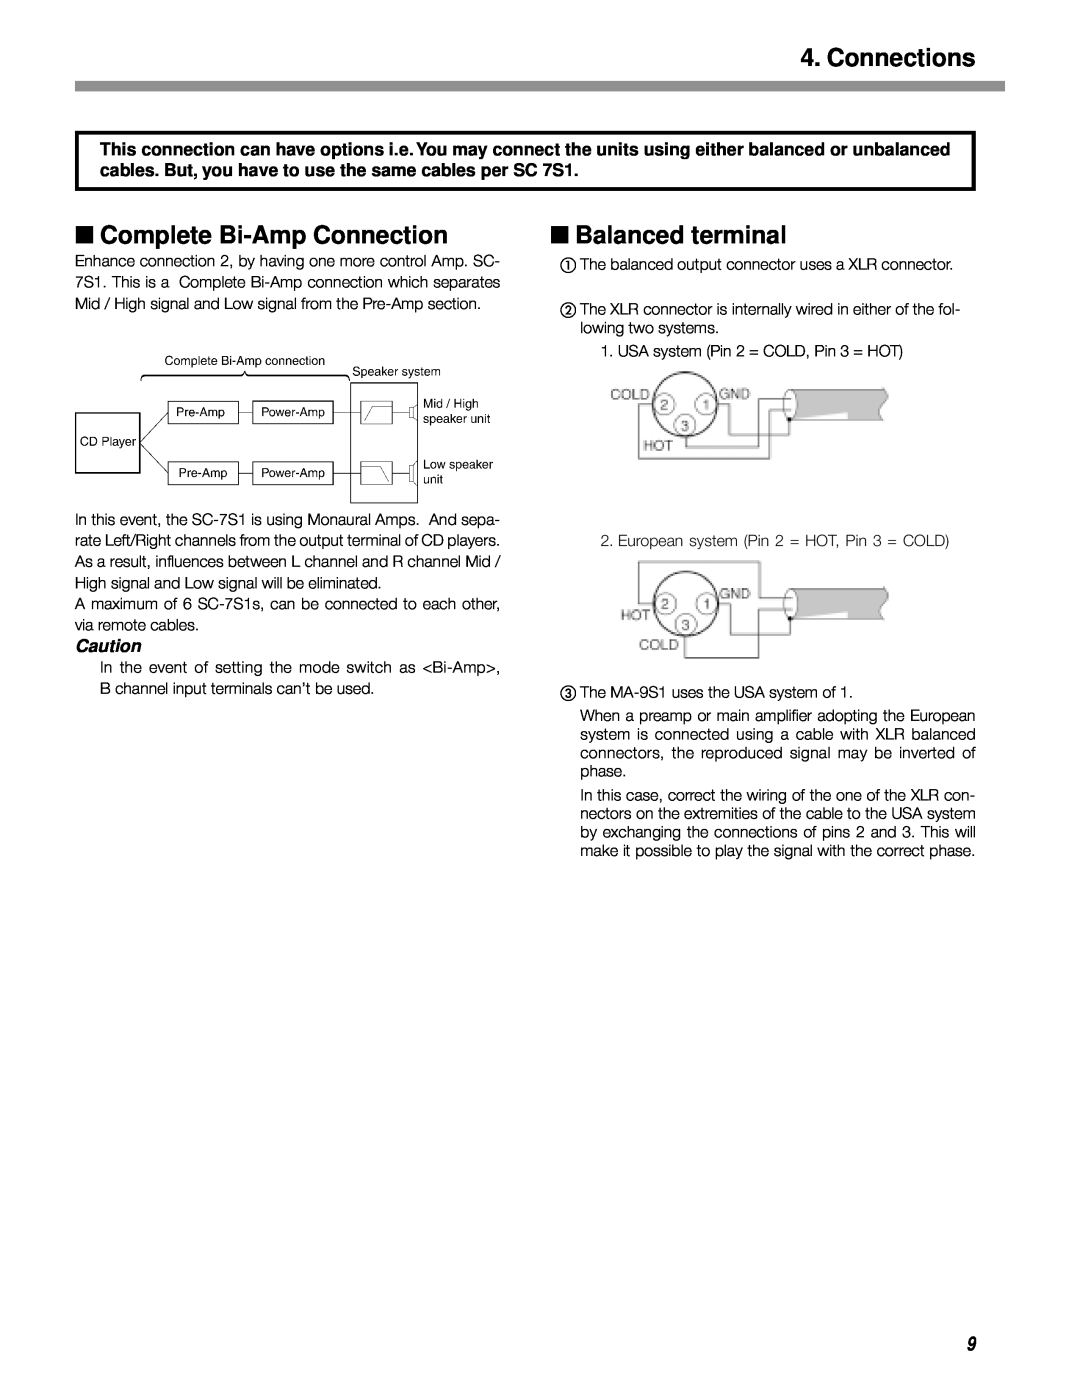 Marantz MA-9S1 manual Complete Bi-AmpConnection, Balanced terminal, Connections 